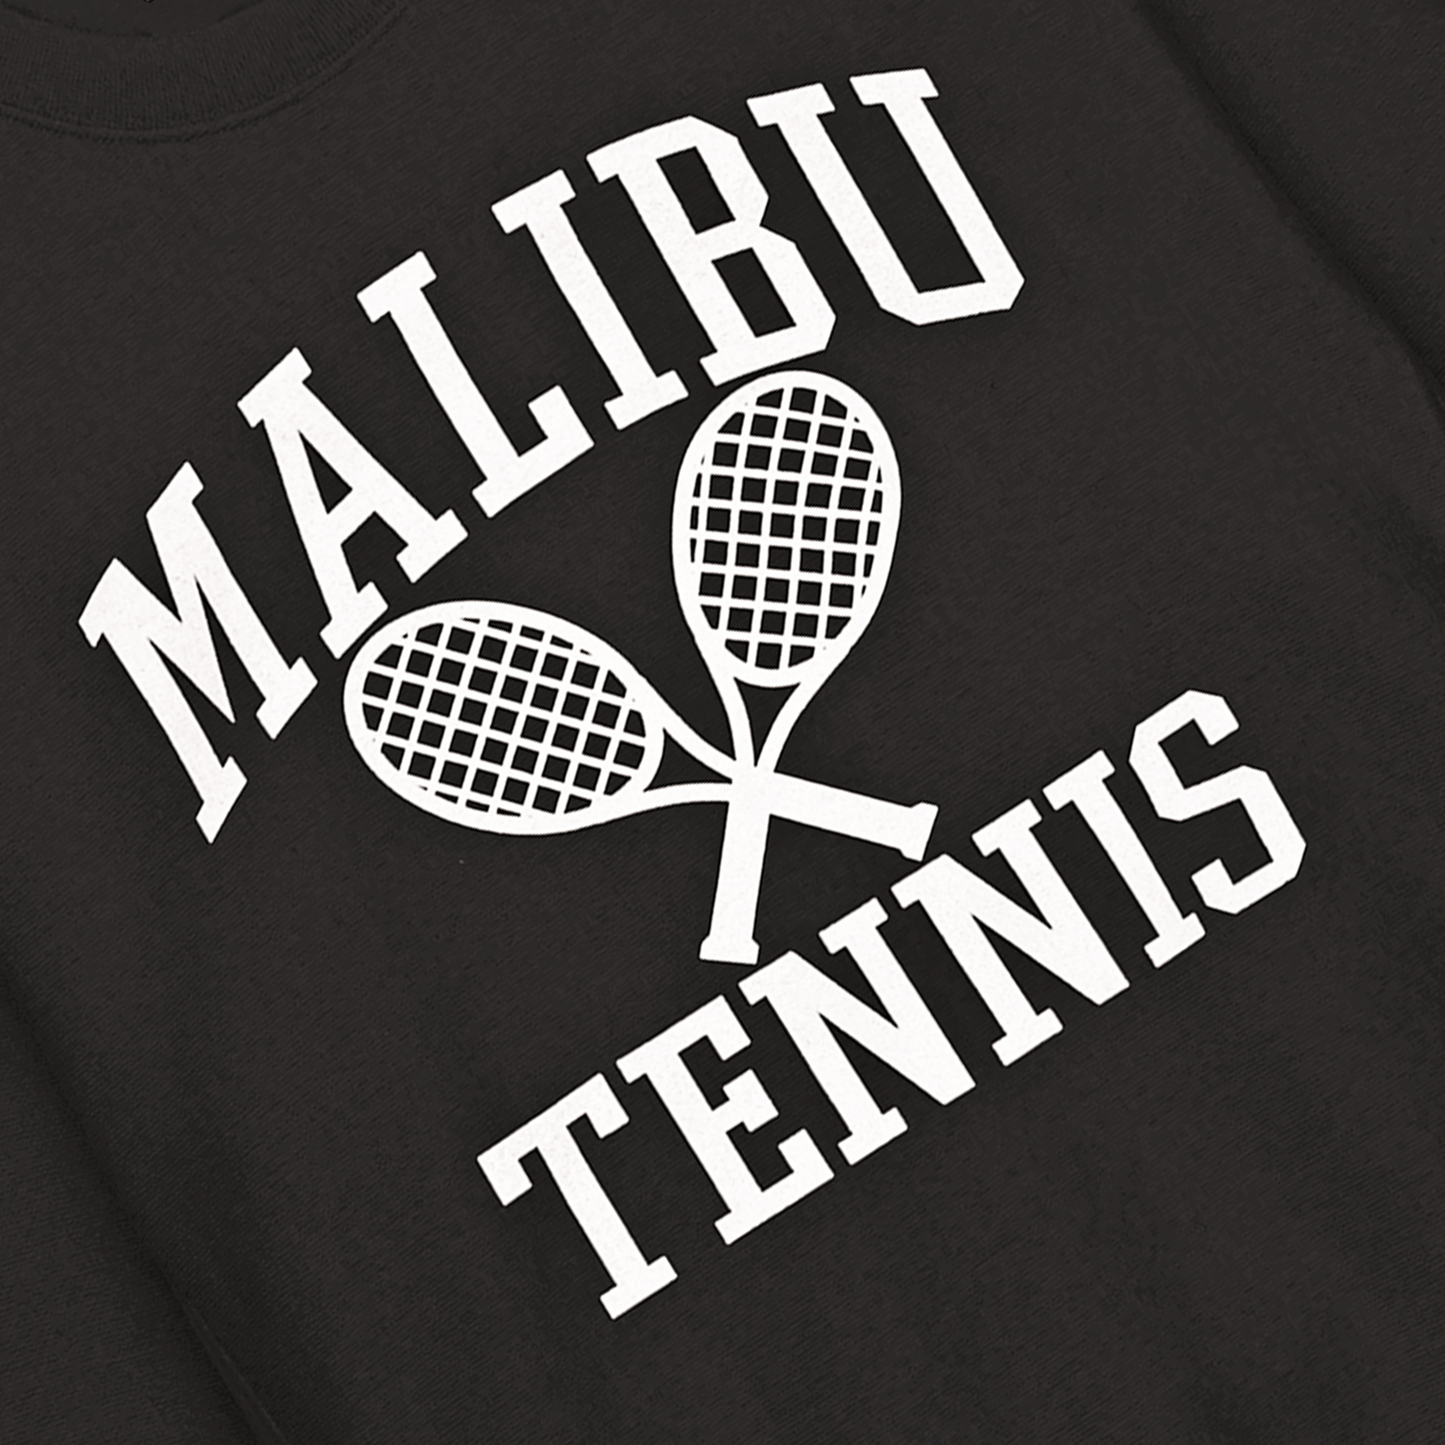 Malibu Tennis Crewneck Sweatshirt